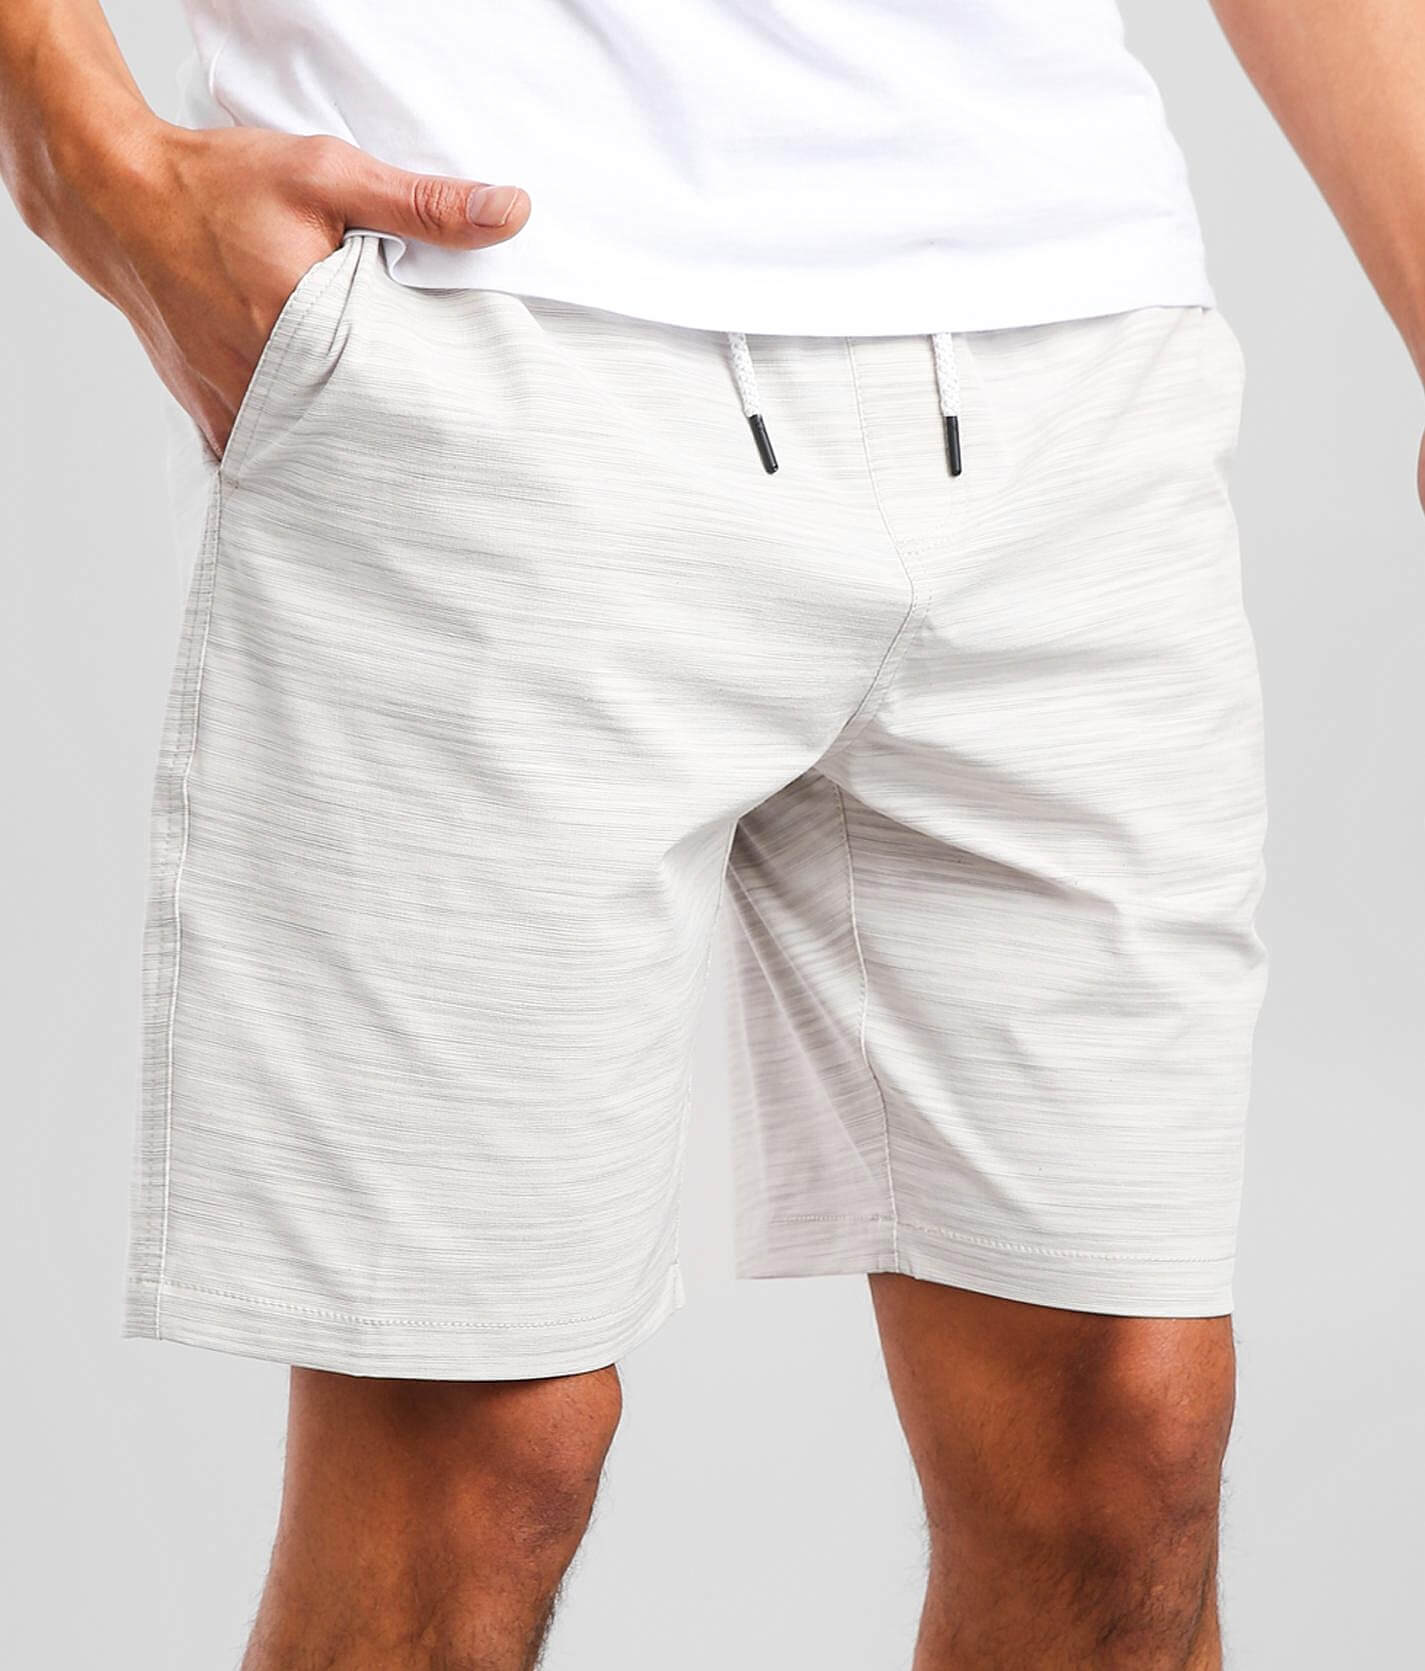 Departwest Collin Marled Stretch Short - Men's Shorts in Cream Grey | Buckle